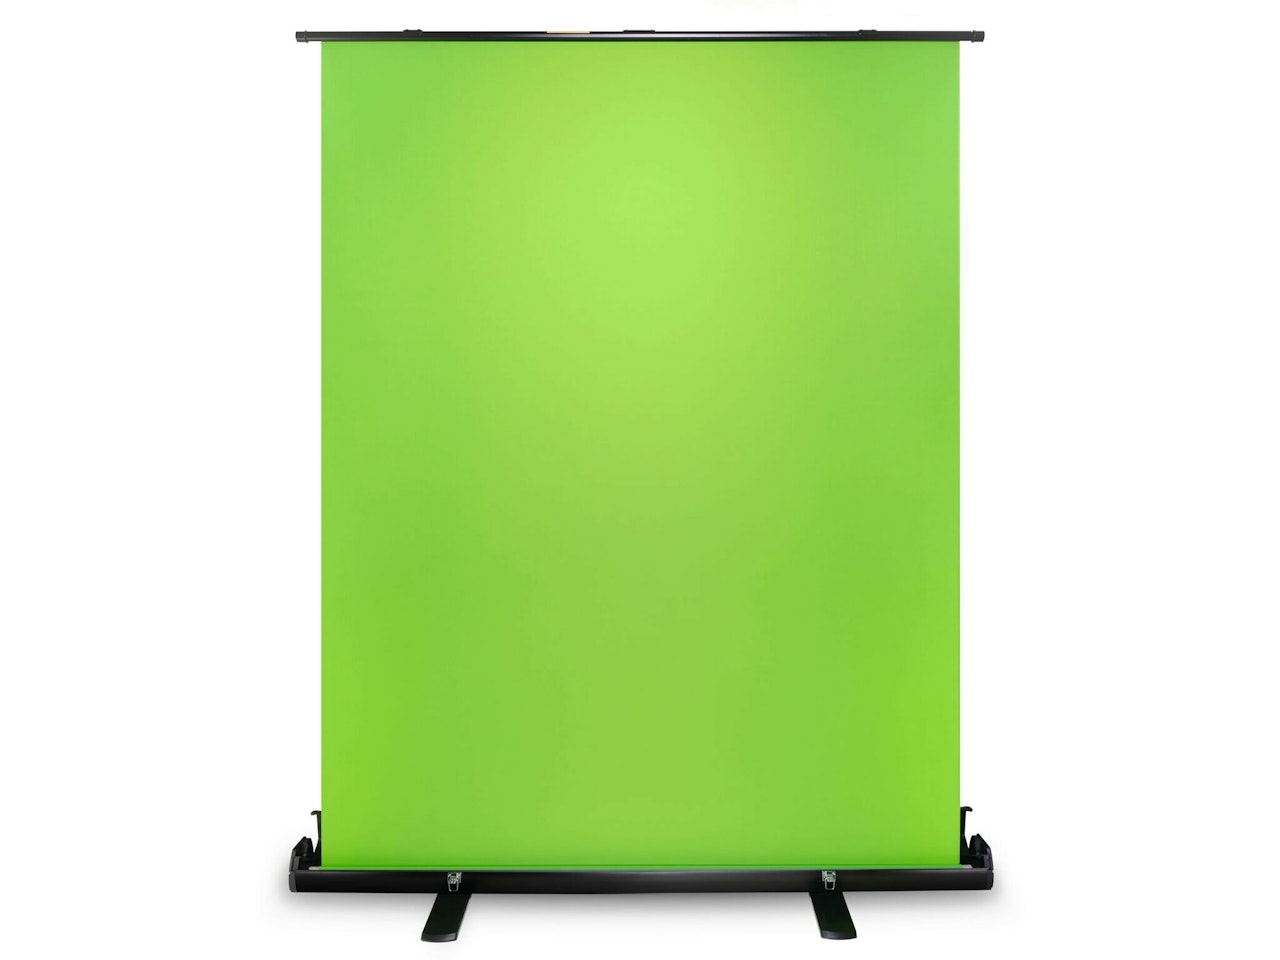 Svive Green Screen - Grön bakgrund - 148x180 cm roll-up